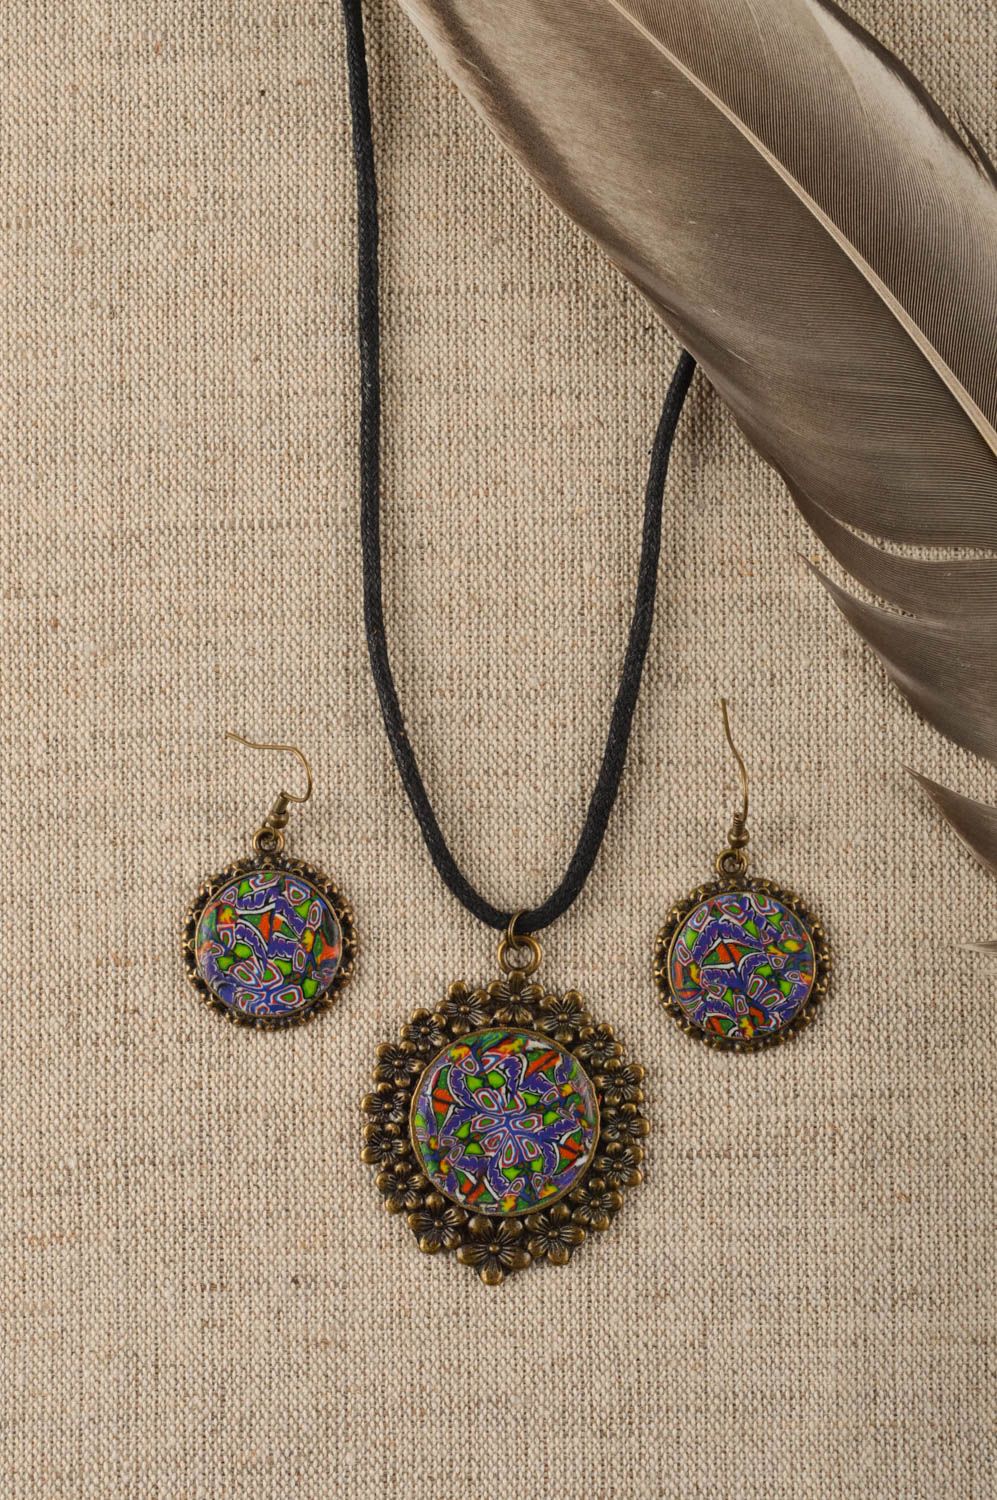 Handmade pendant and earrings elite jewelry set stylish cute accessories photo 1